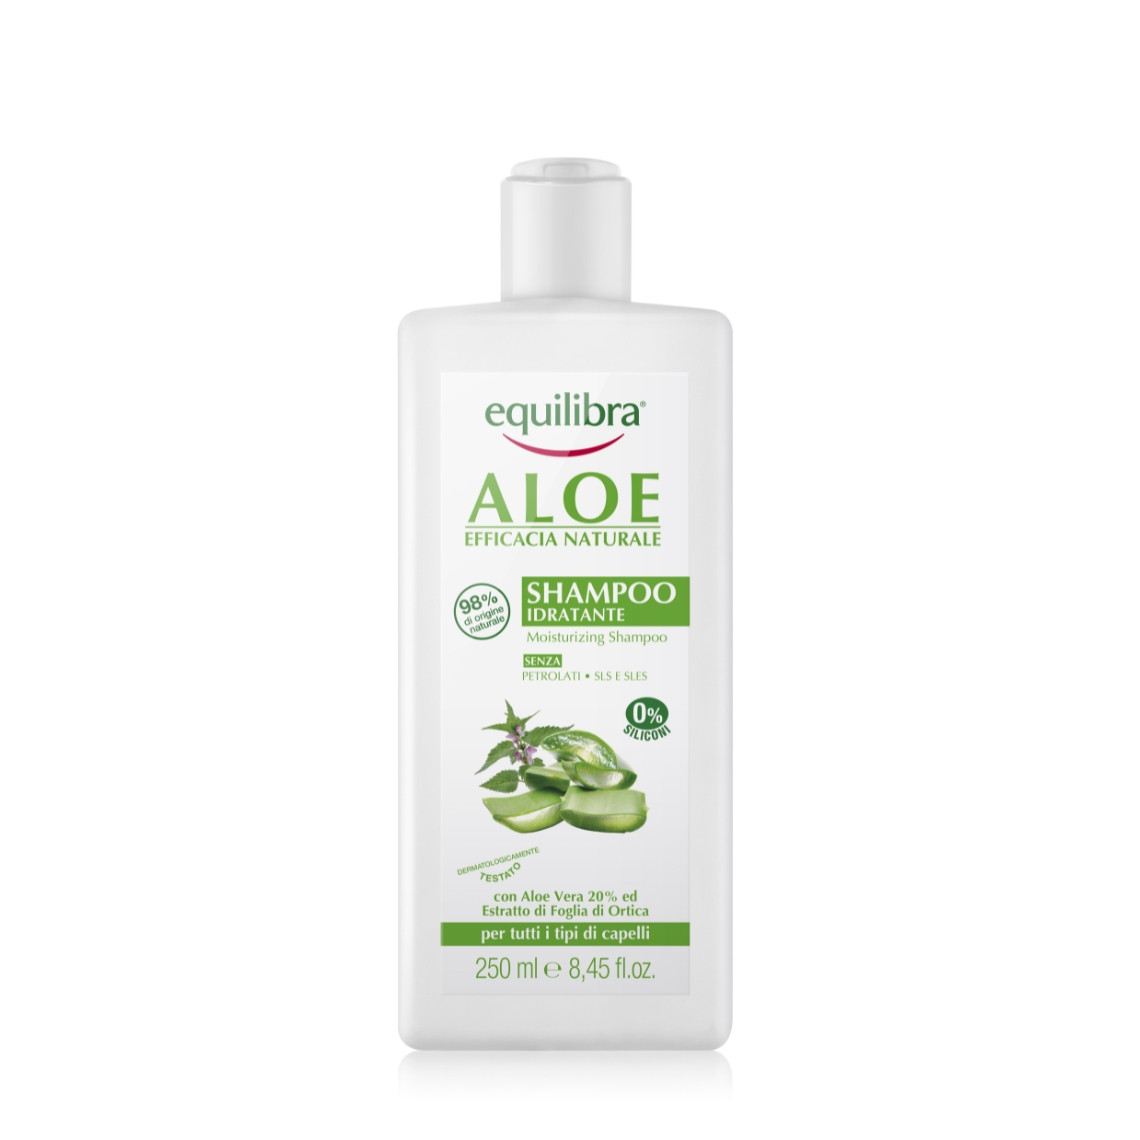 aqulibra szampon